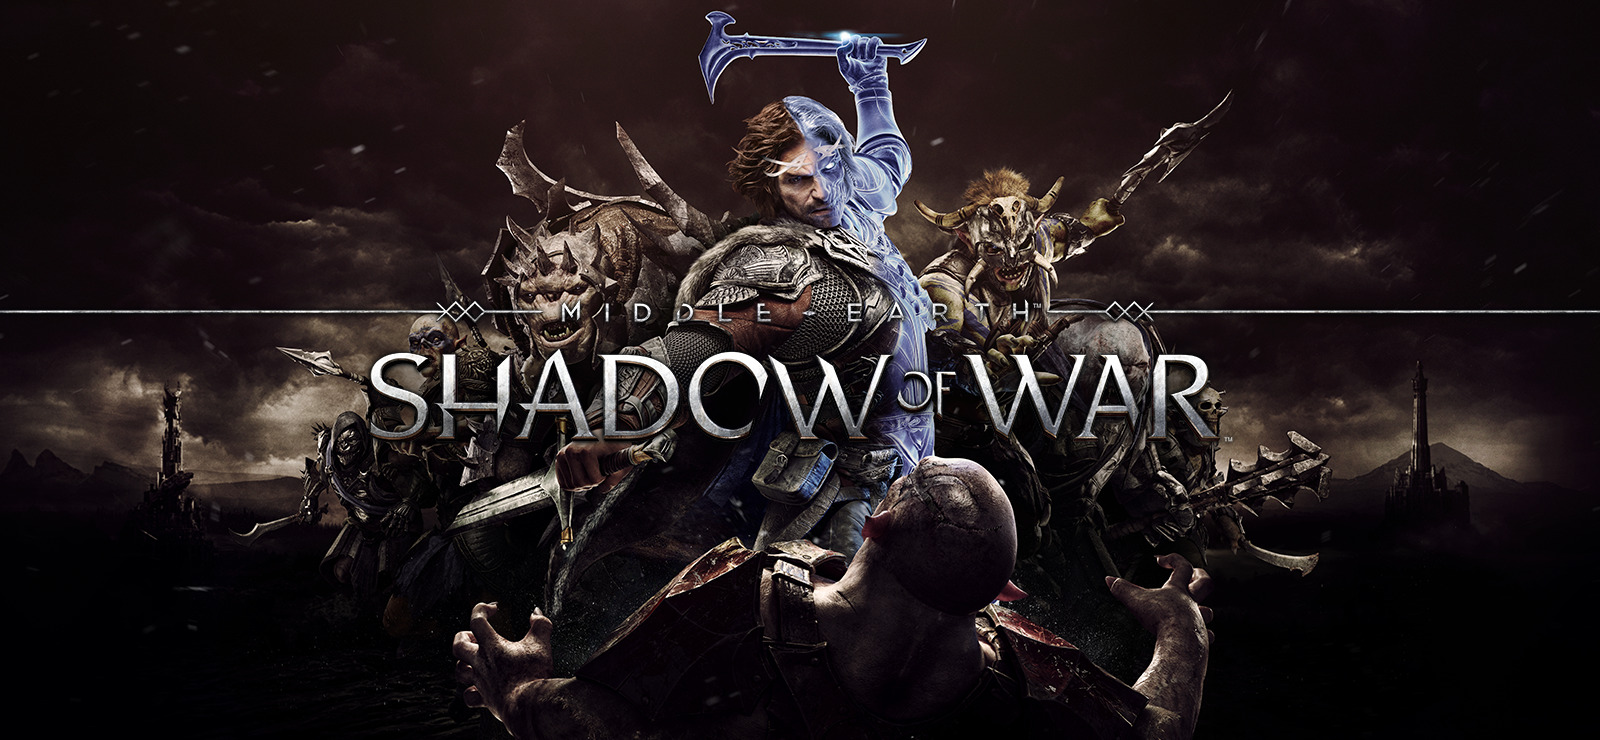 دانلود ترینر بازی Middle Earth Shadow of War